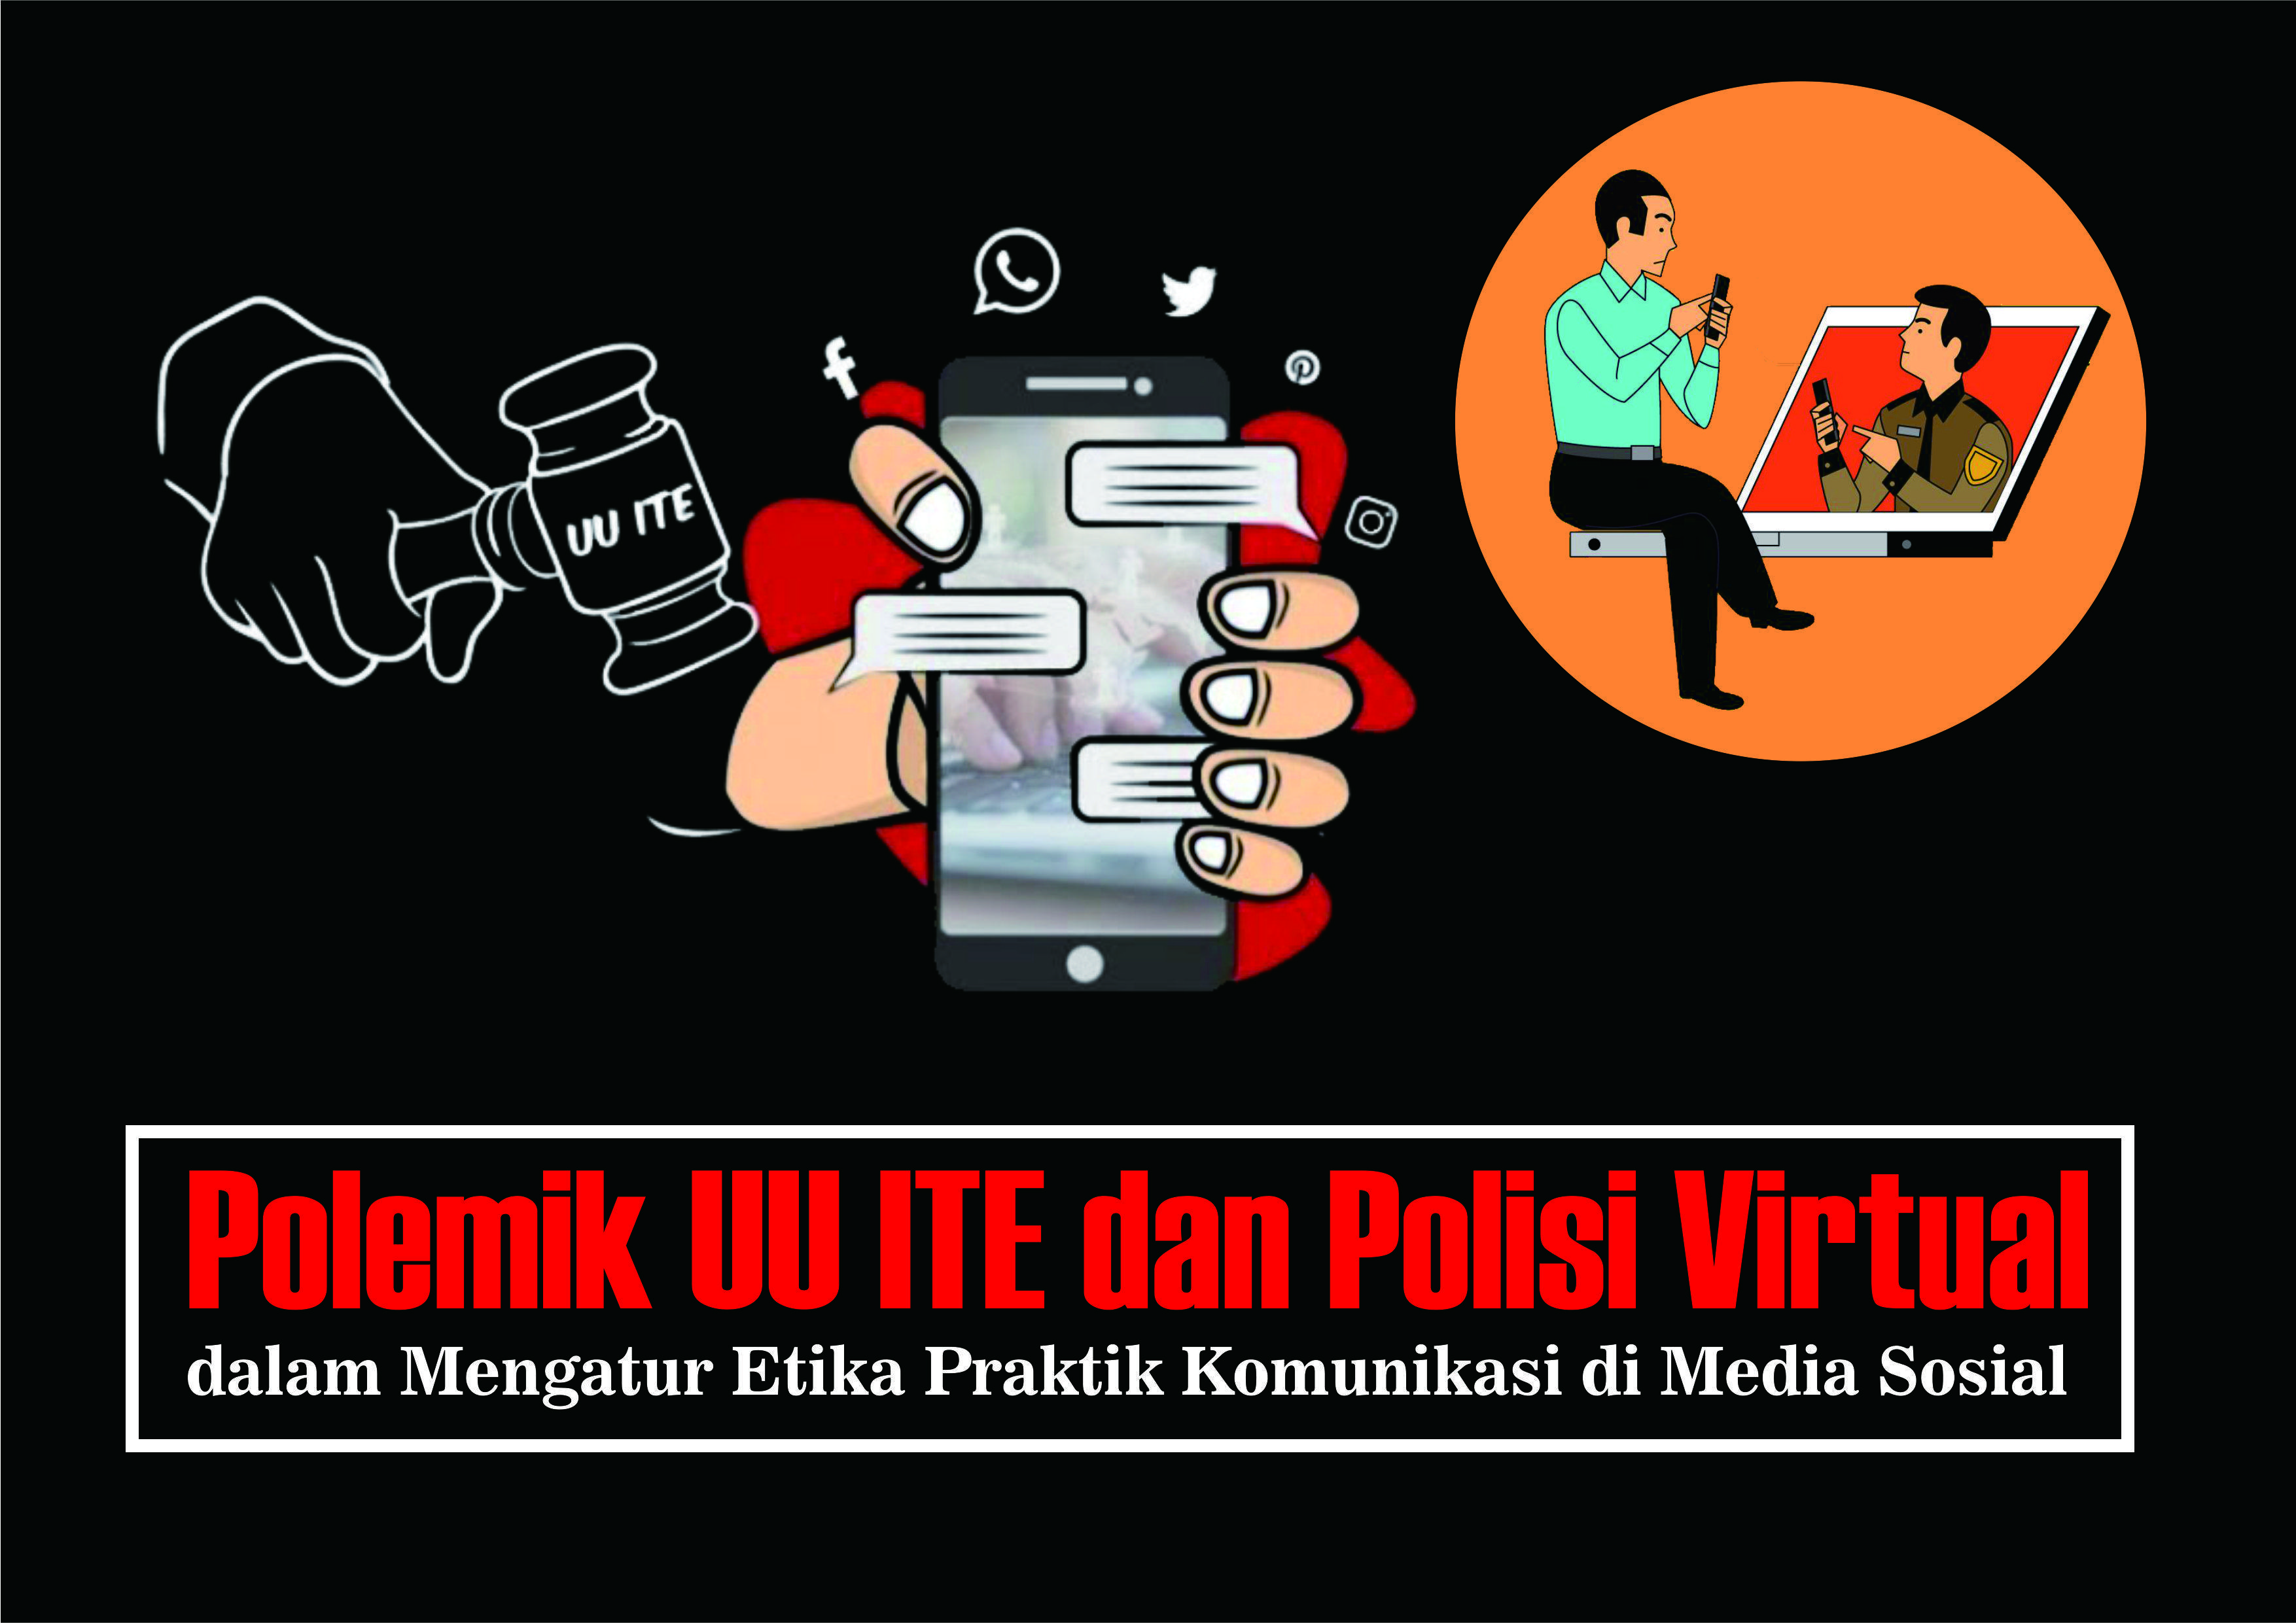 Polemik UU ITE dan Polisi Virtual dalam Mengatur Etika Praktik Komunikasi di Media Sosial